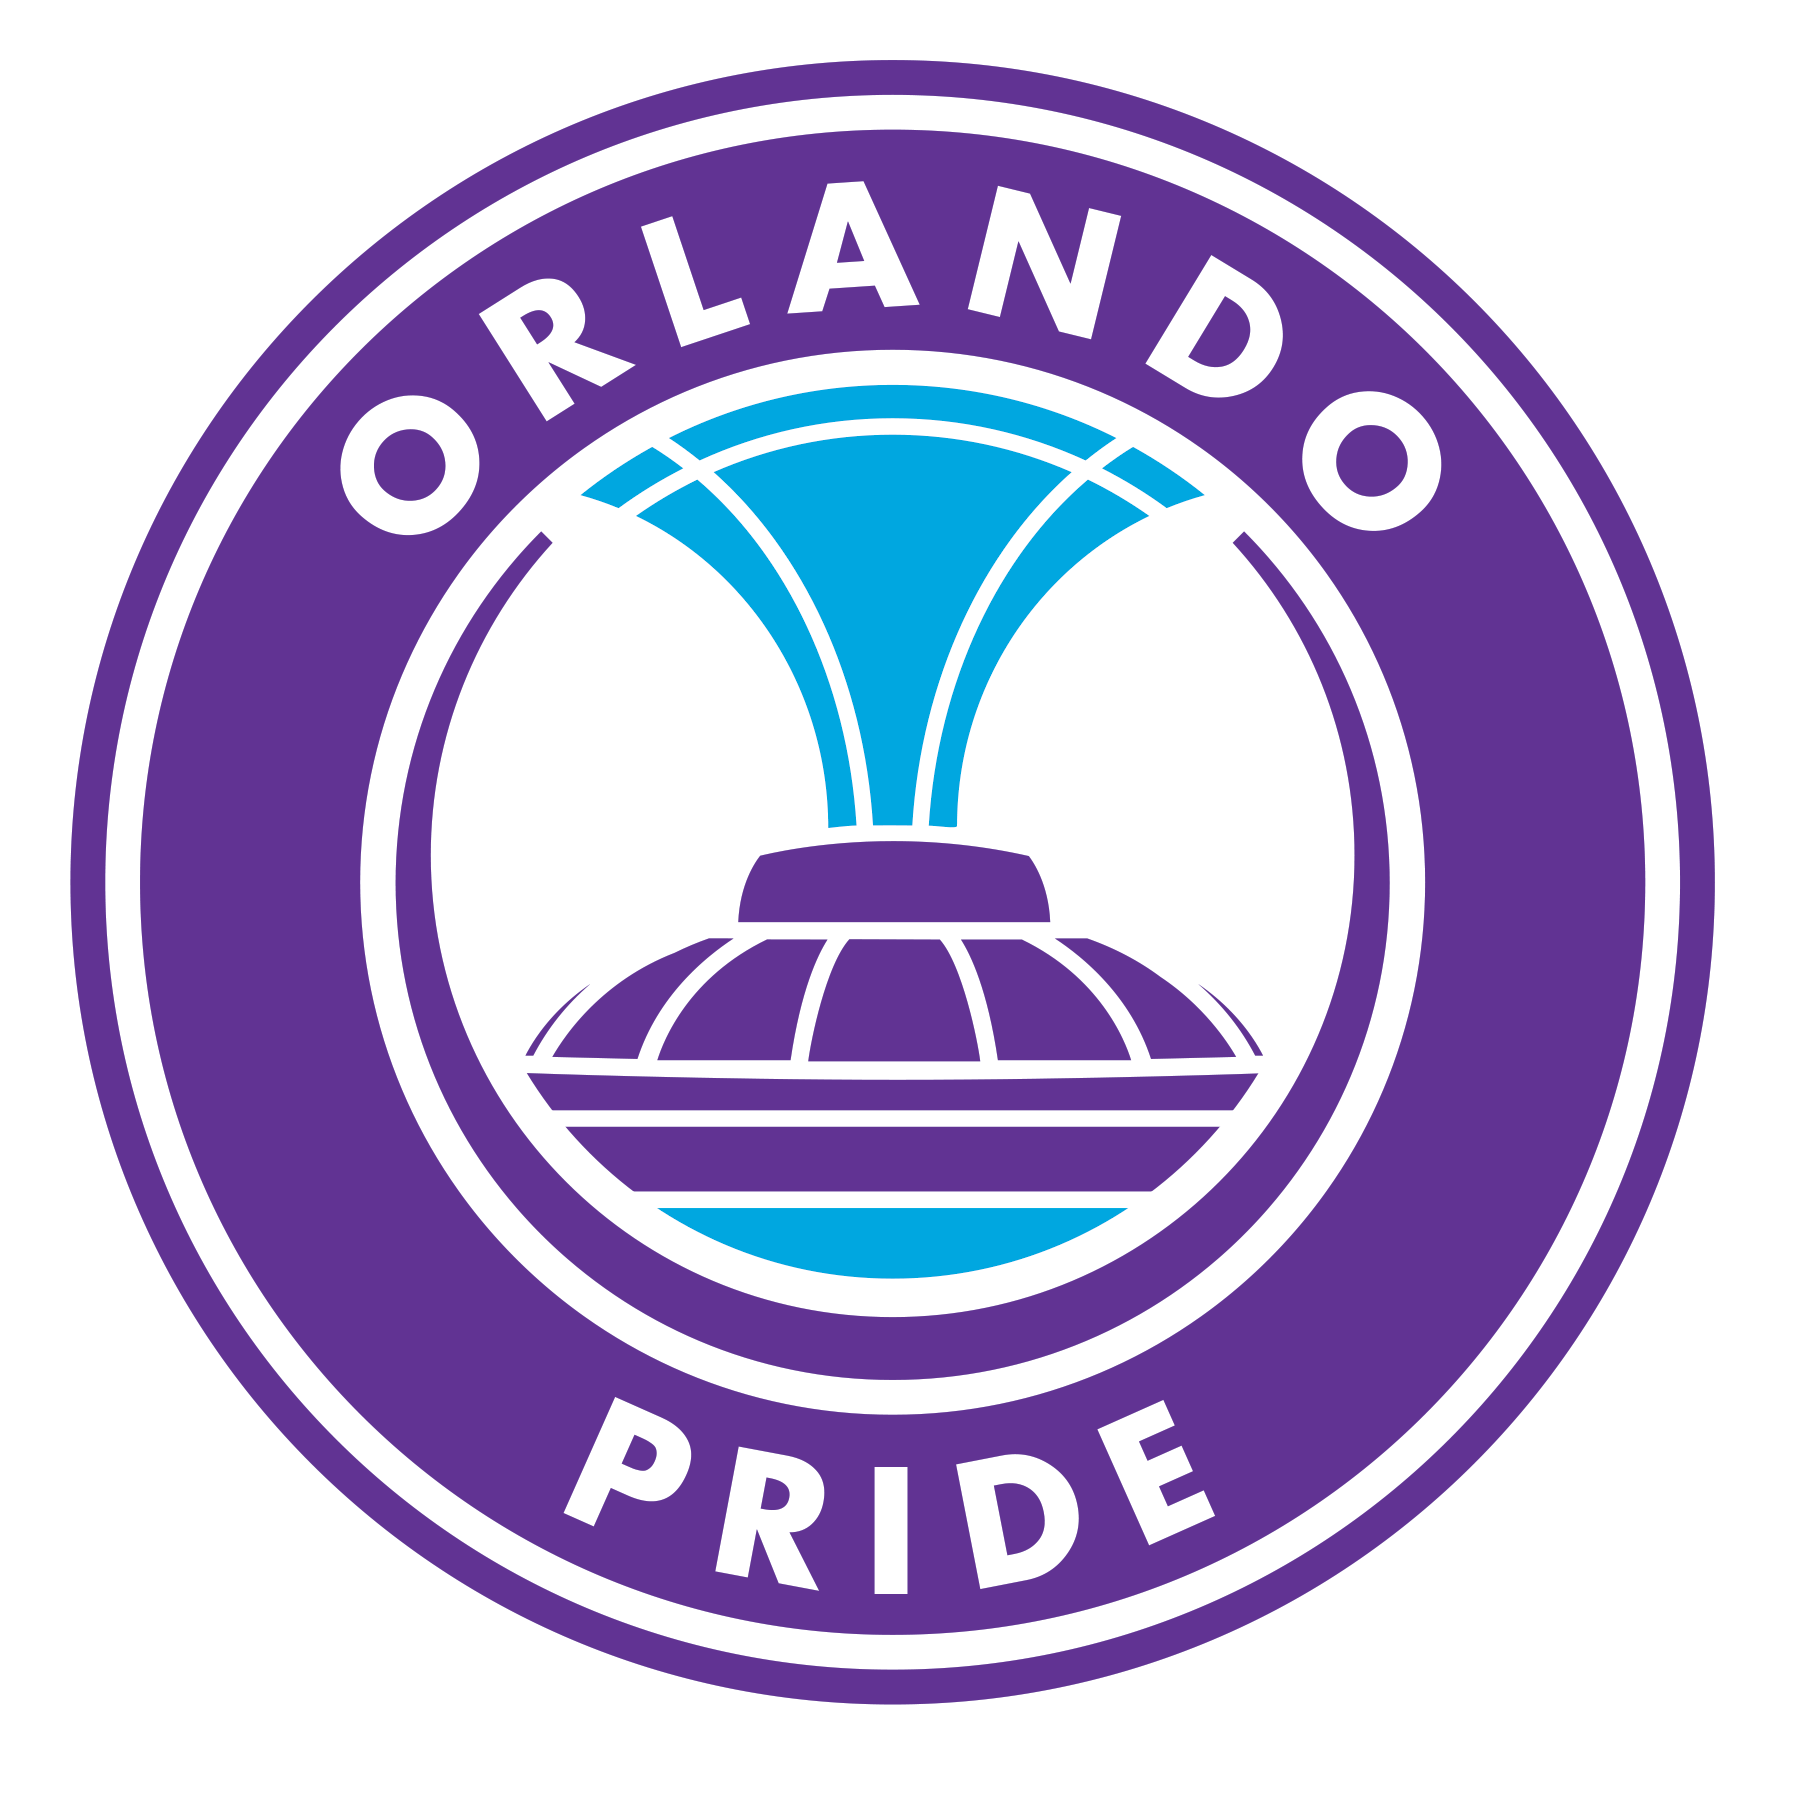 Orlando Pride Logo